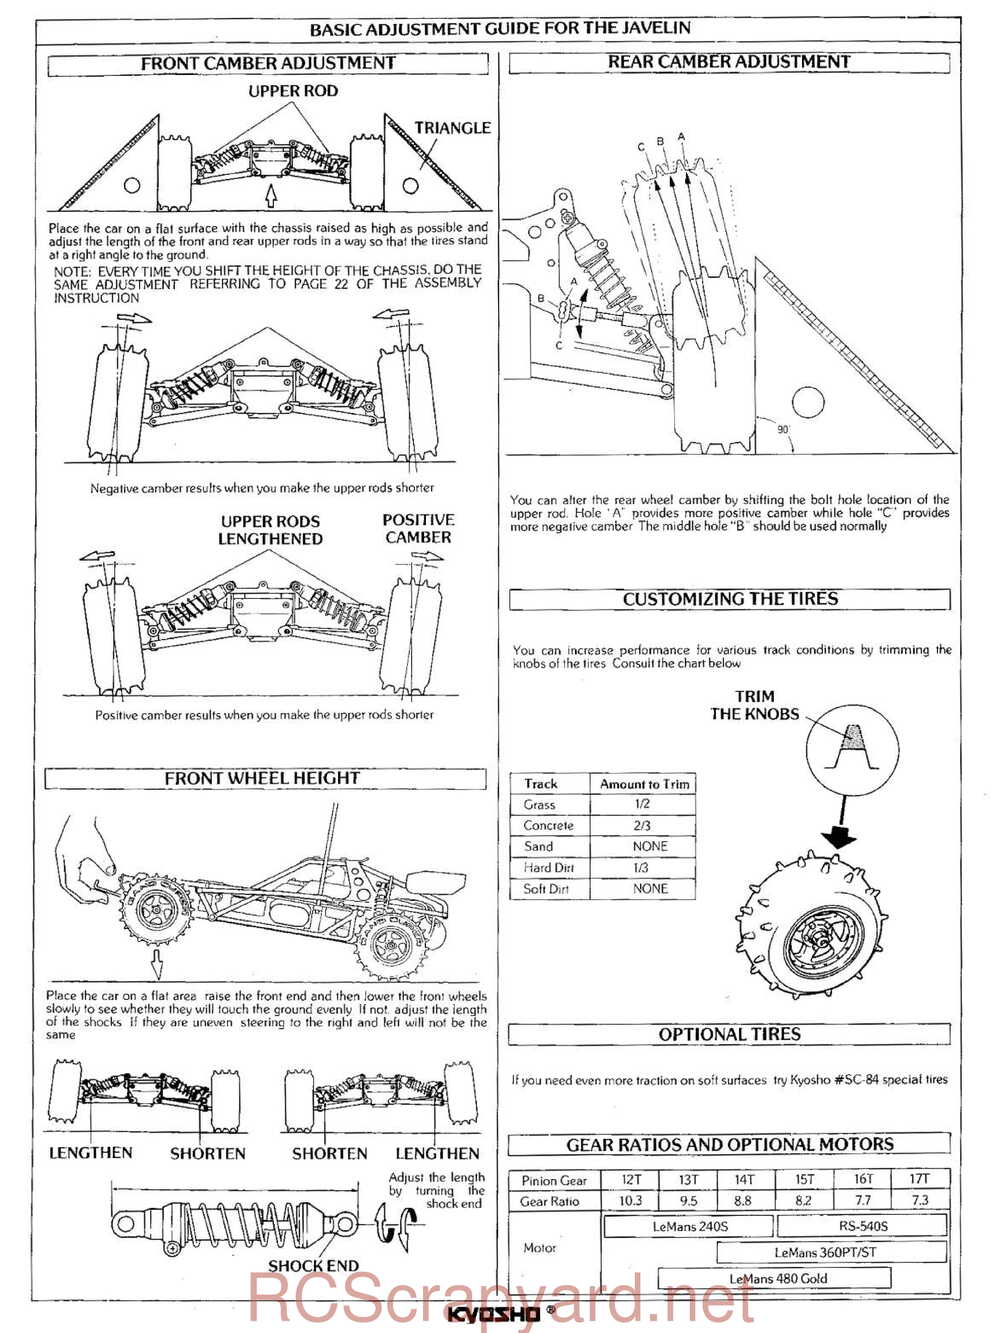 Kyosho - 3031 - Javelin - Manual - Page 21